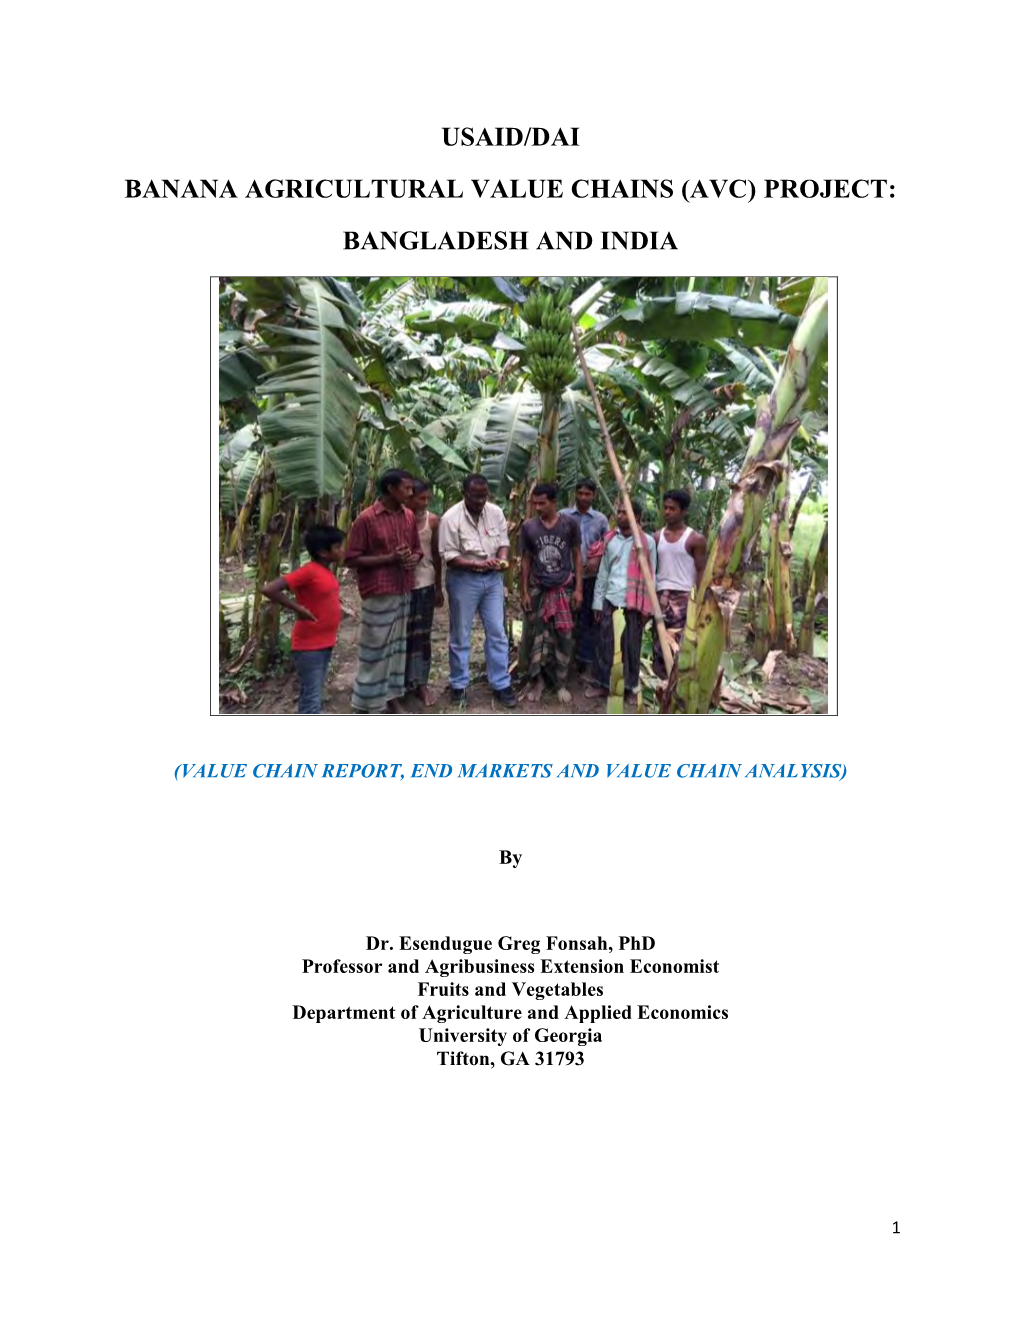 Usaid/Dai Banana Agricultural Value Chains (Avc) Project: Bangladesh and India